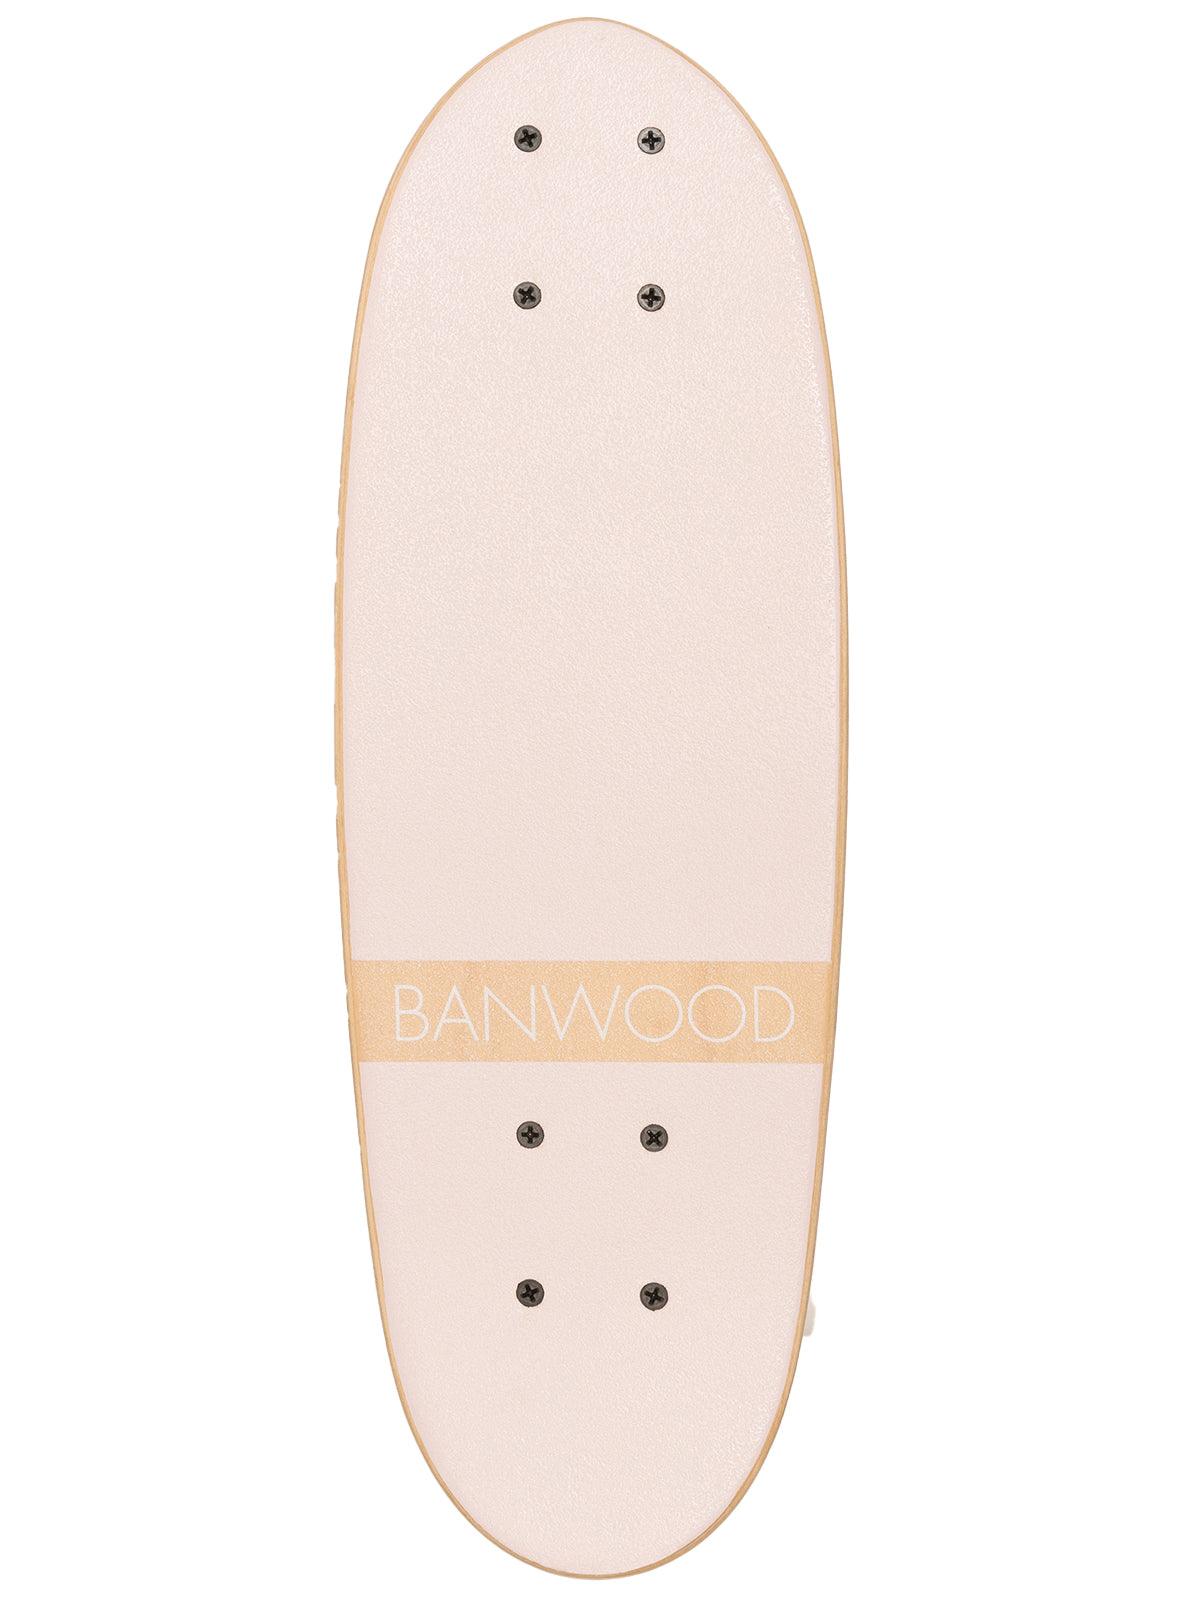 Banwood Skateboard - Why and Whale